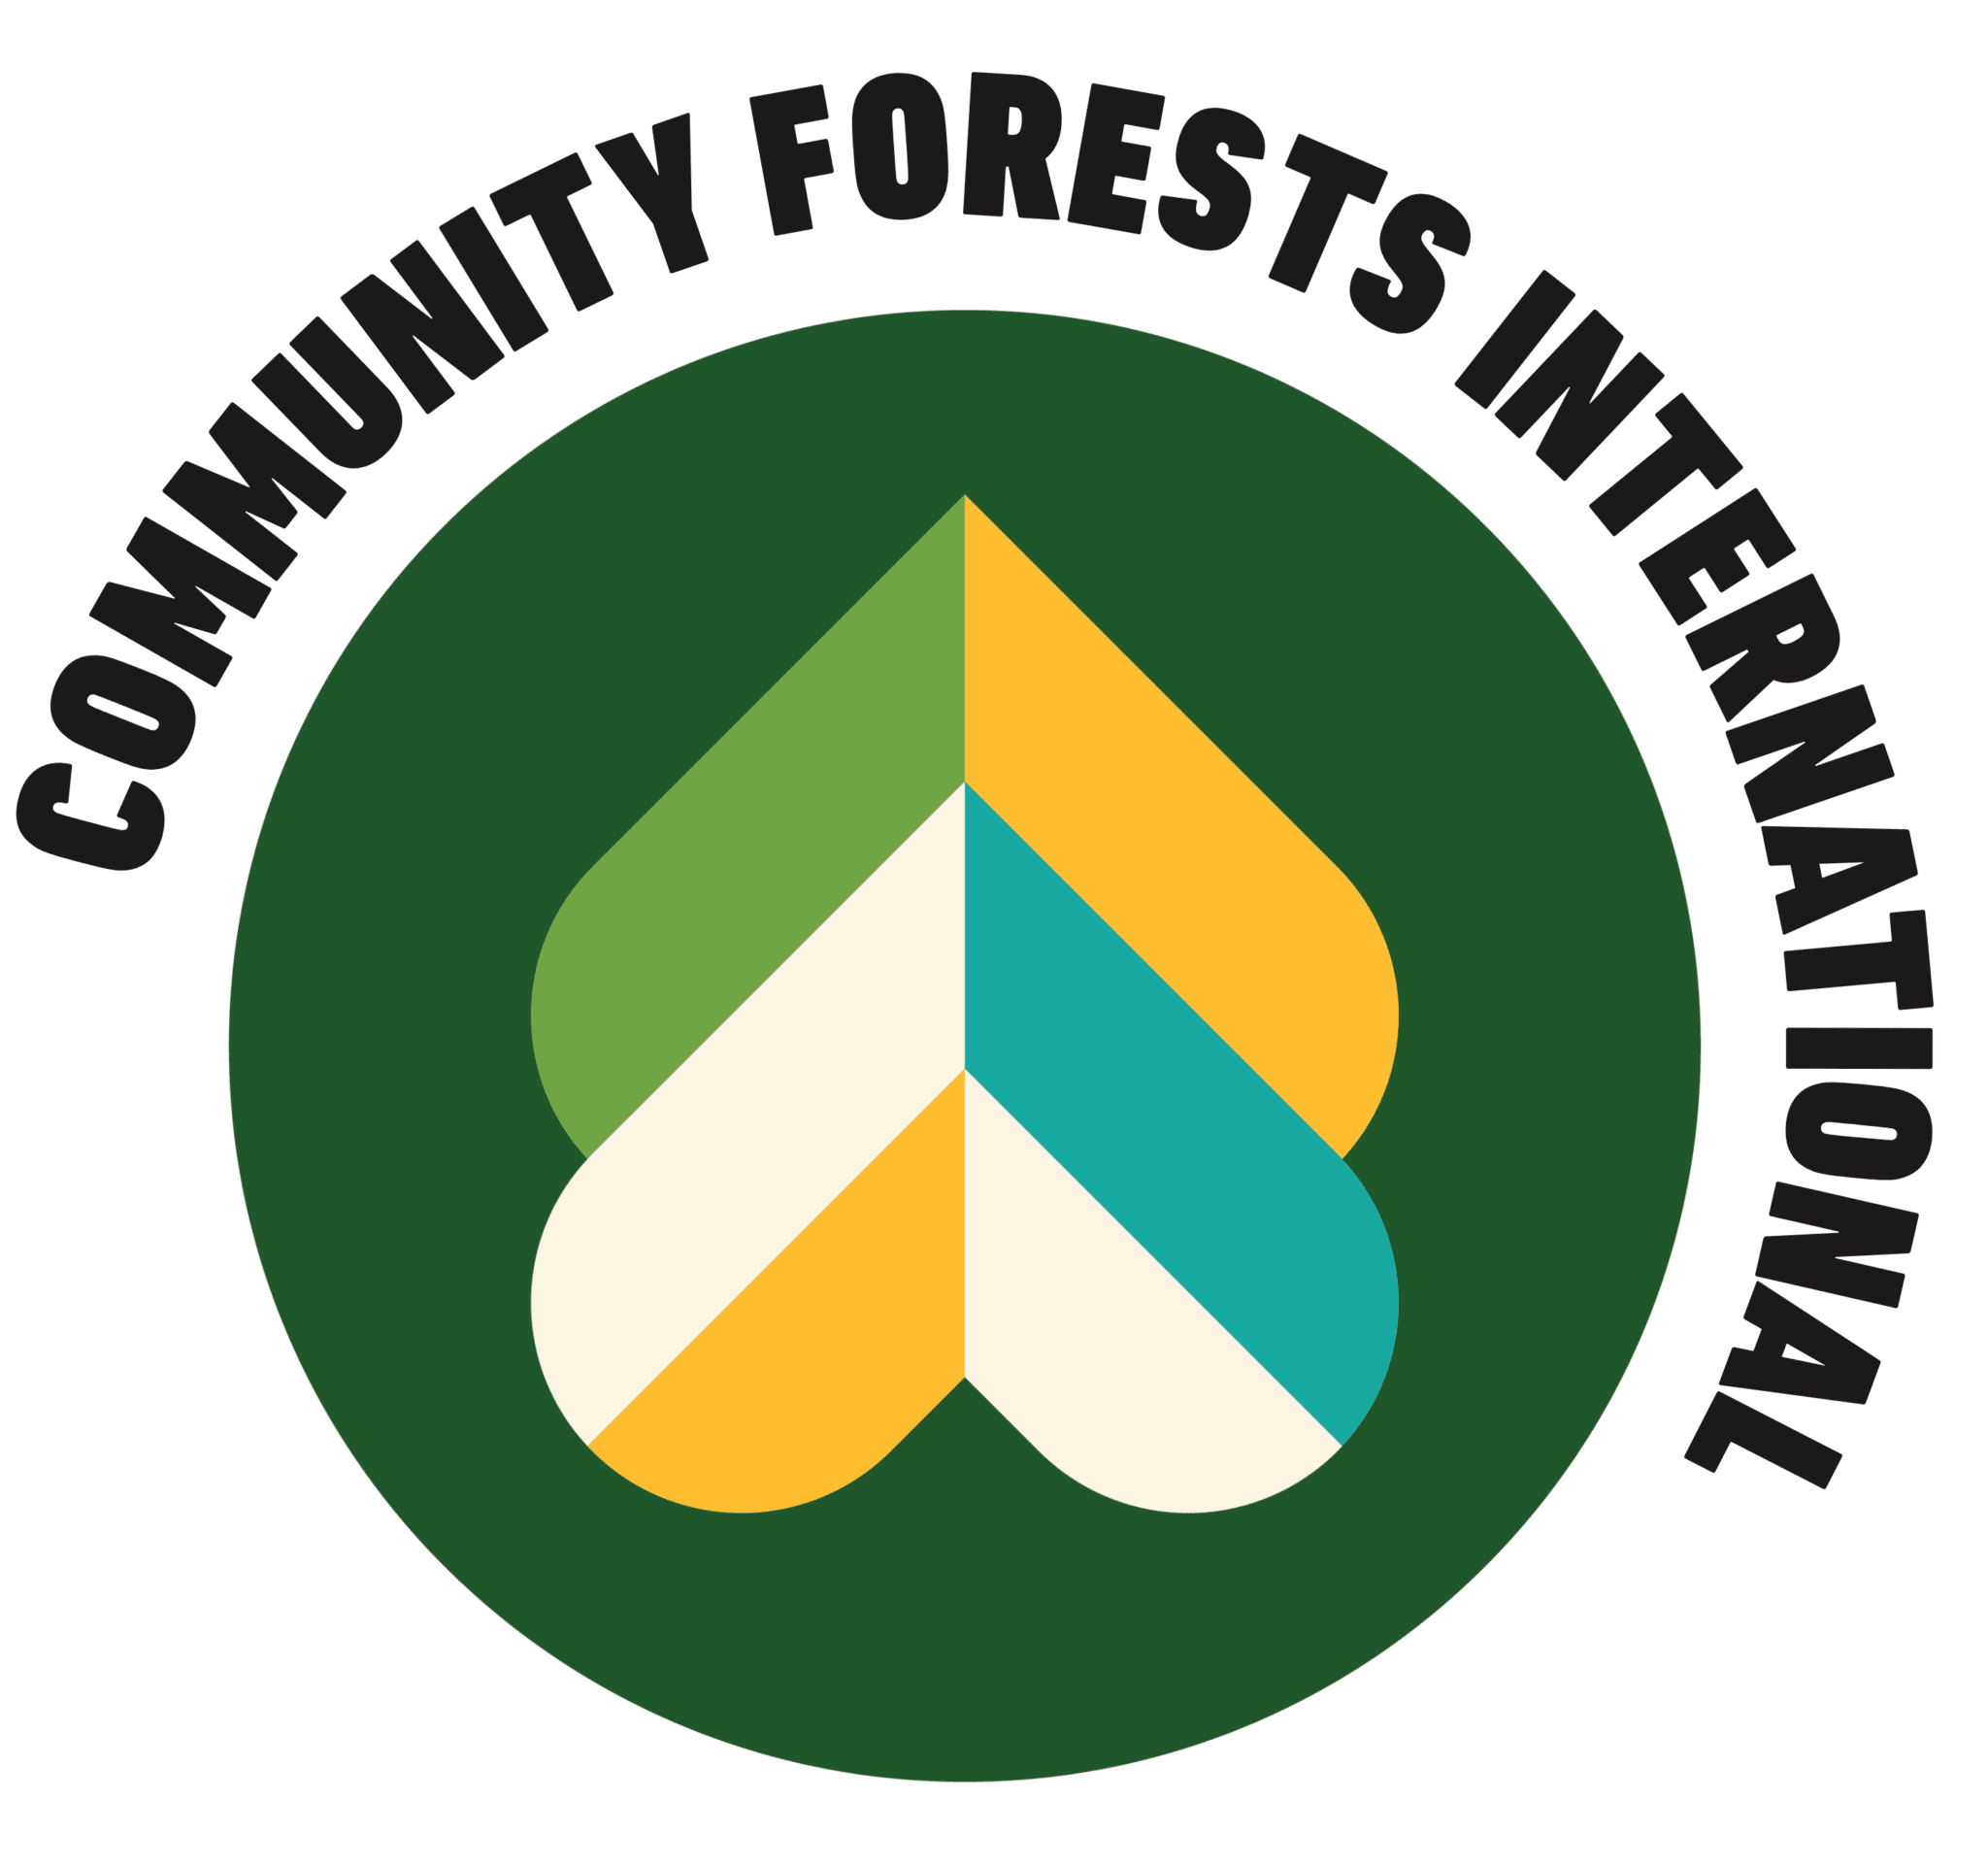 The Community Forests International Logo.